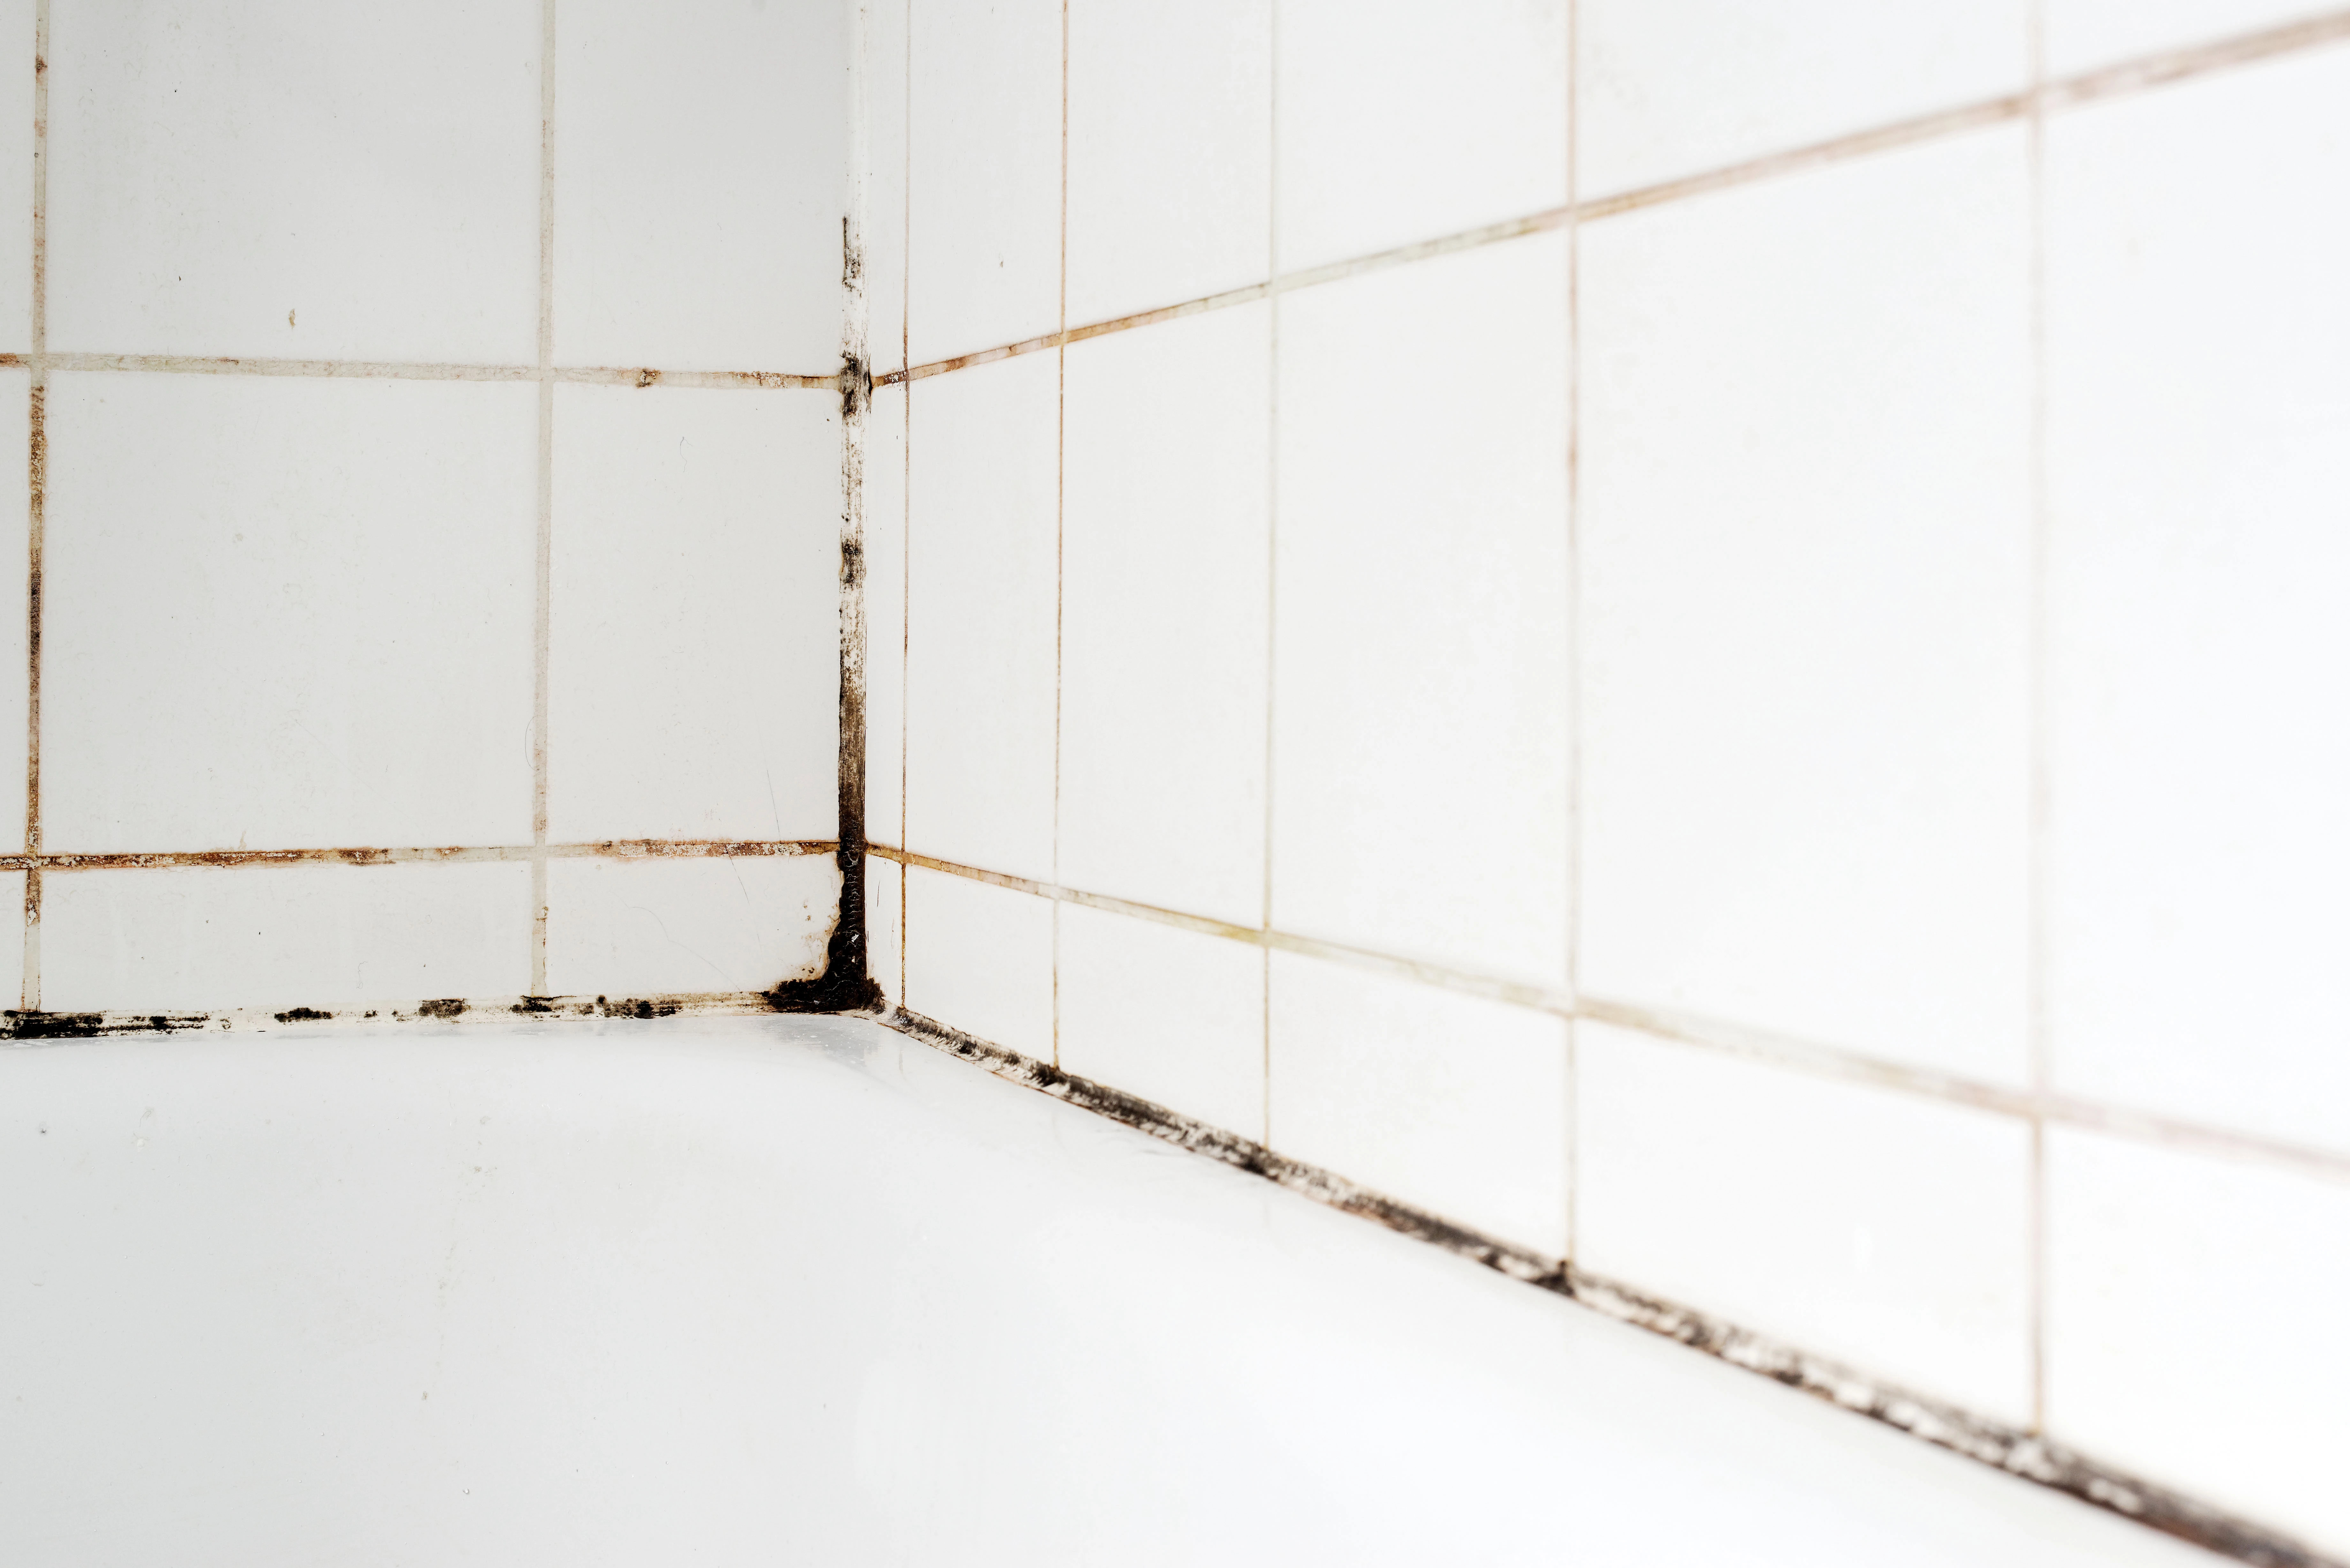 Interior mould on white bathroom tiles.